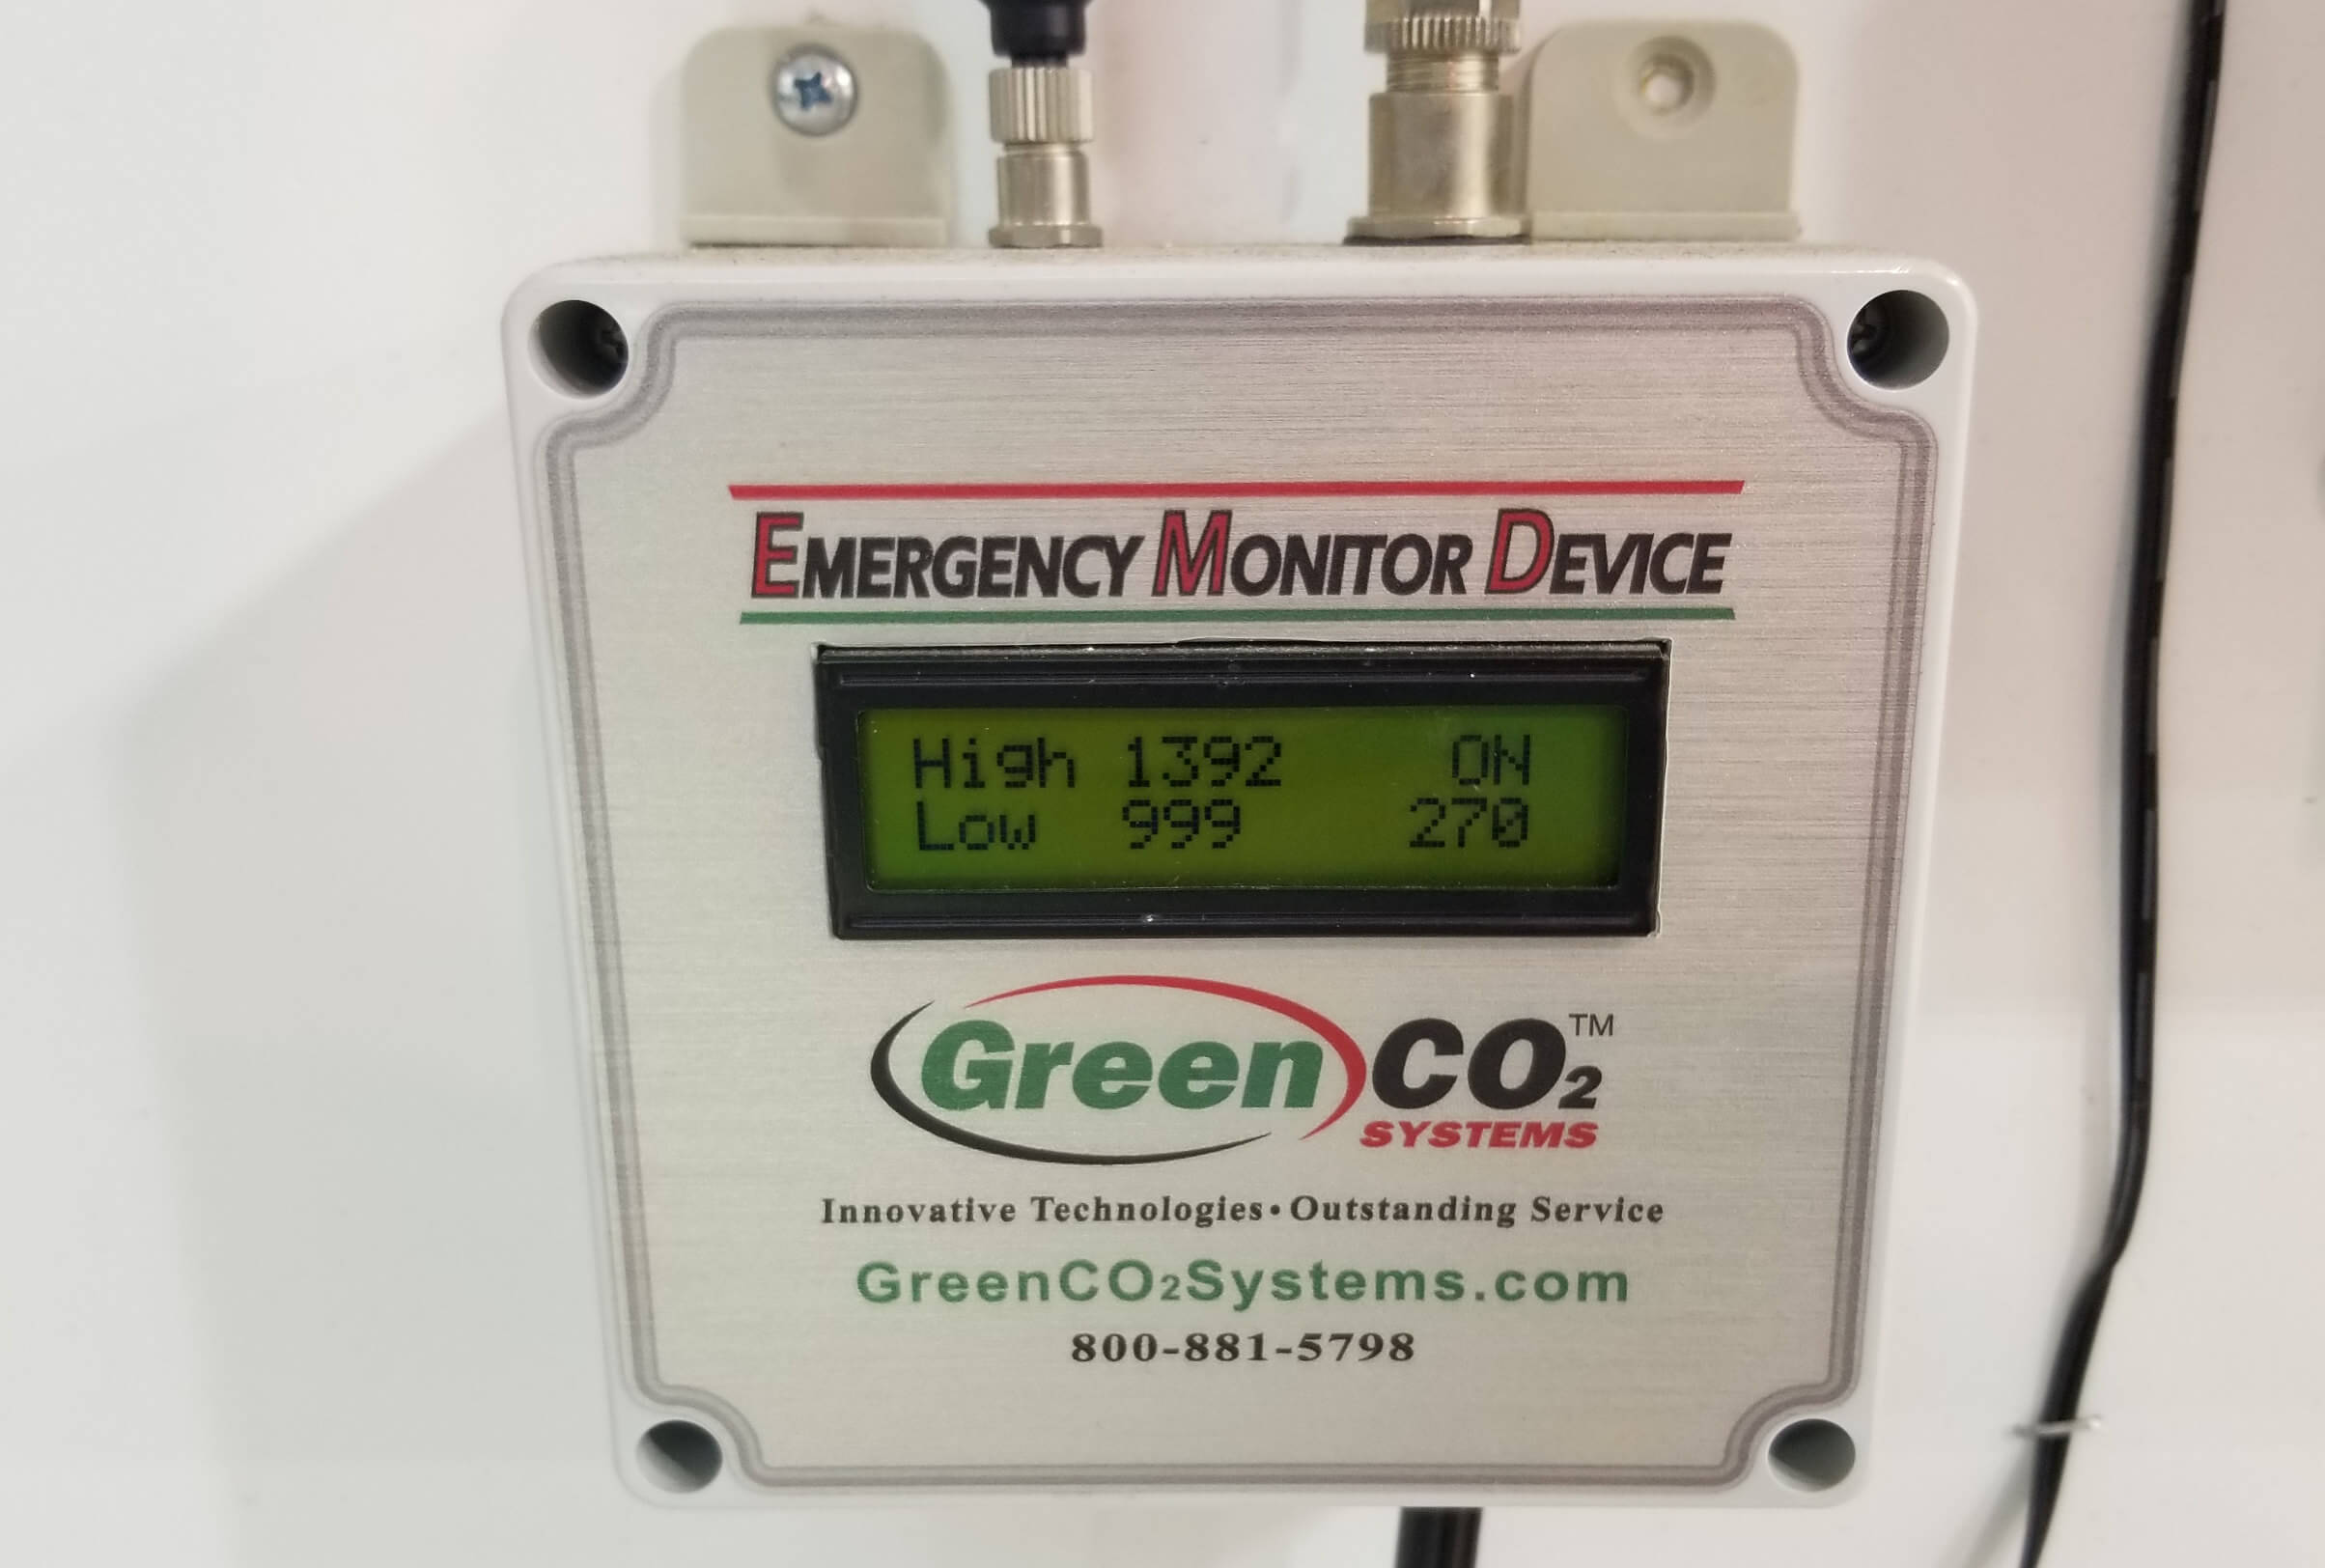 Emergency Monitor Device